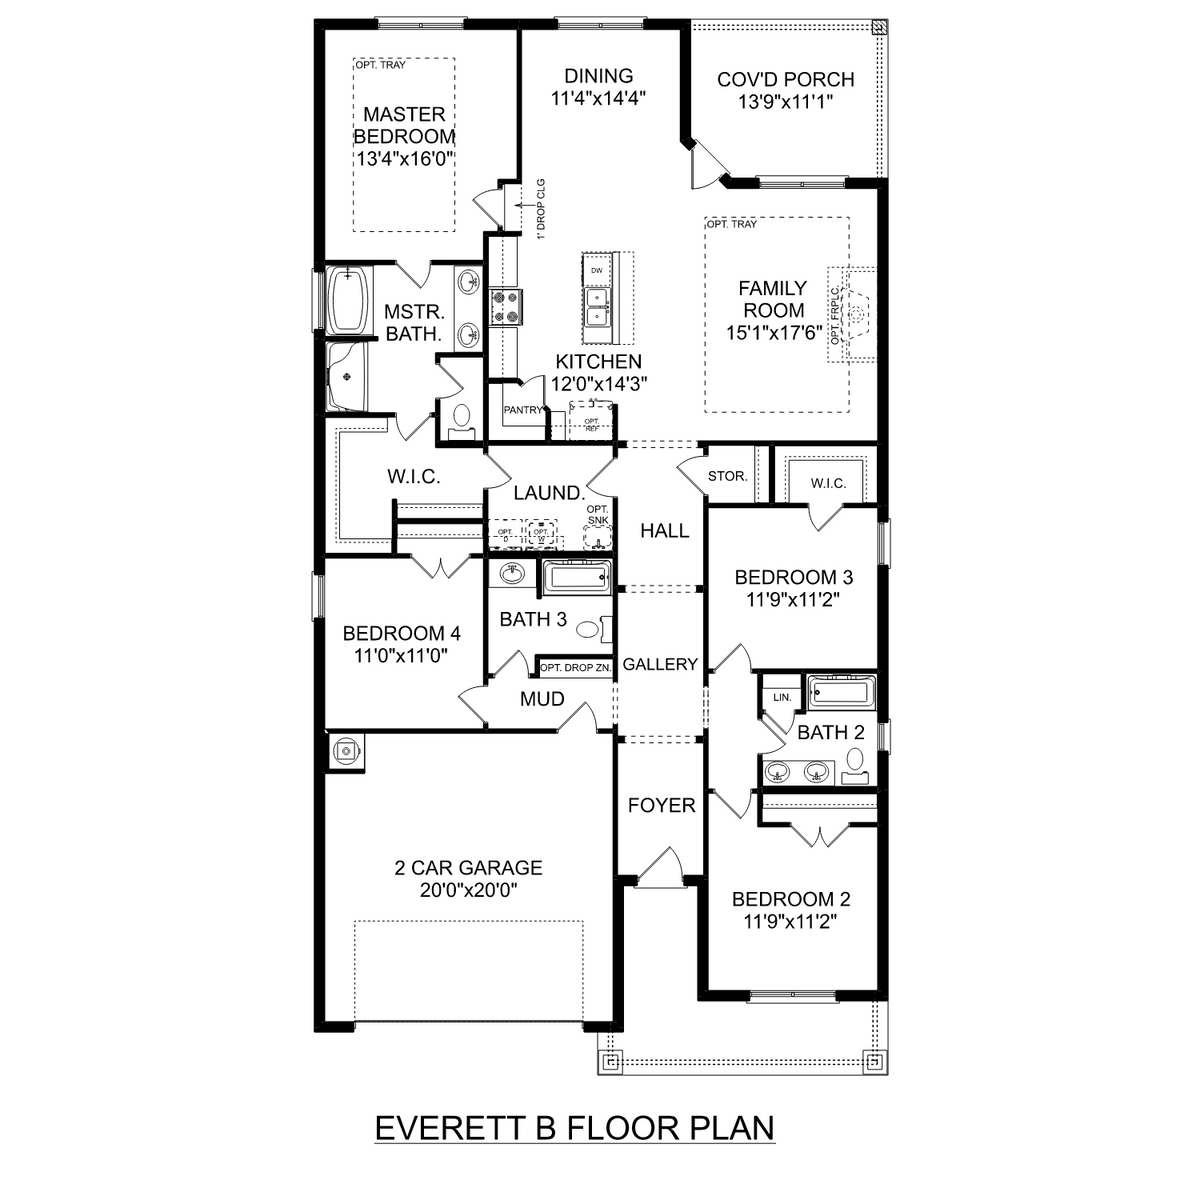 1 - The Everett B floor plan layout for 116 Cedar Lake Road in Davidson Homes' Wood Trail community.